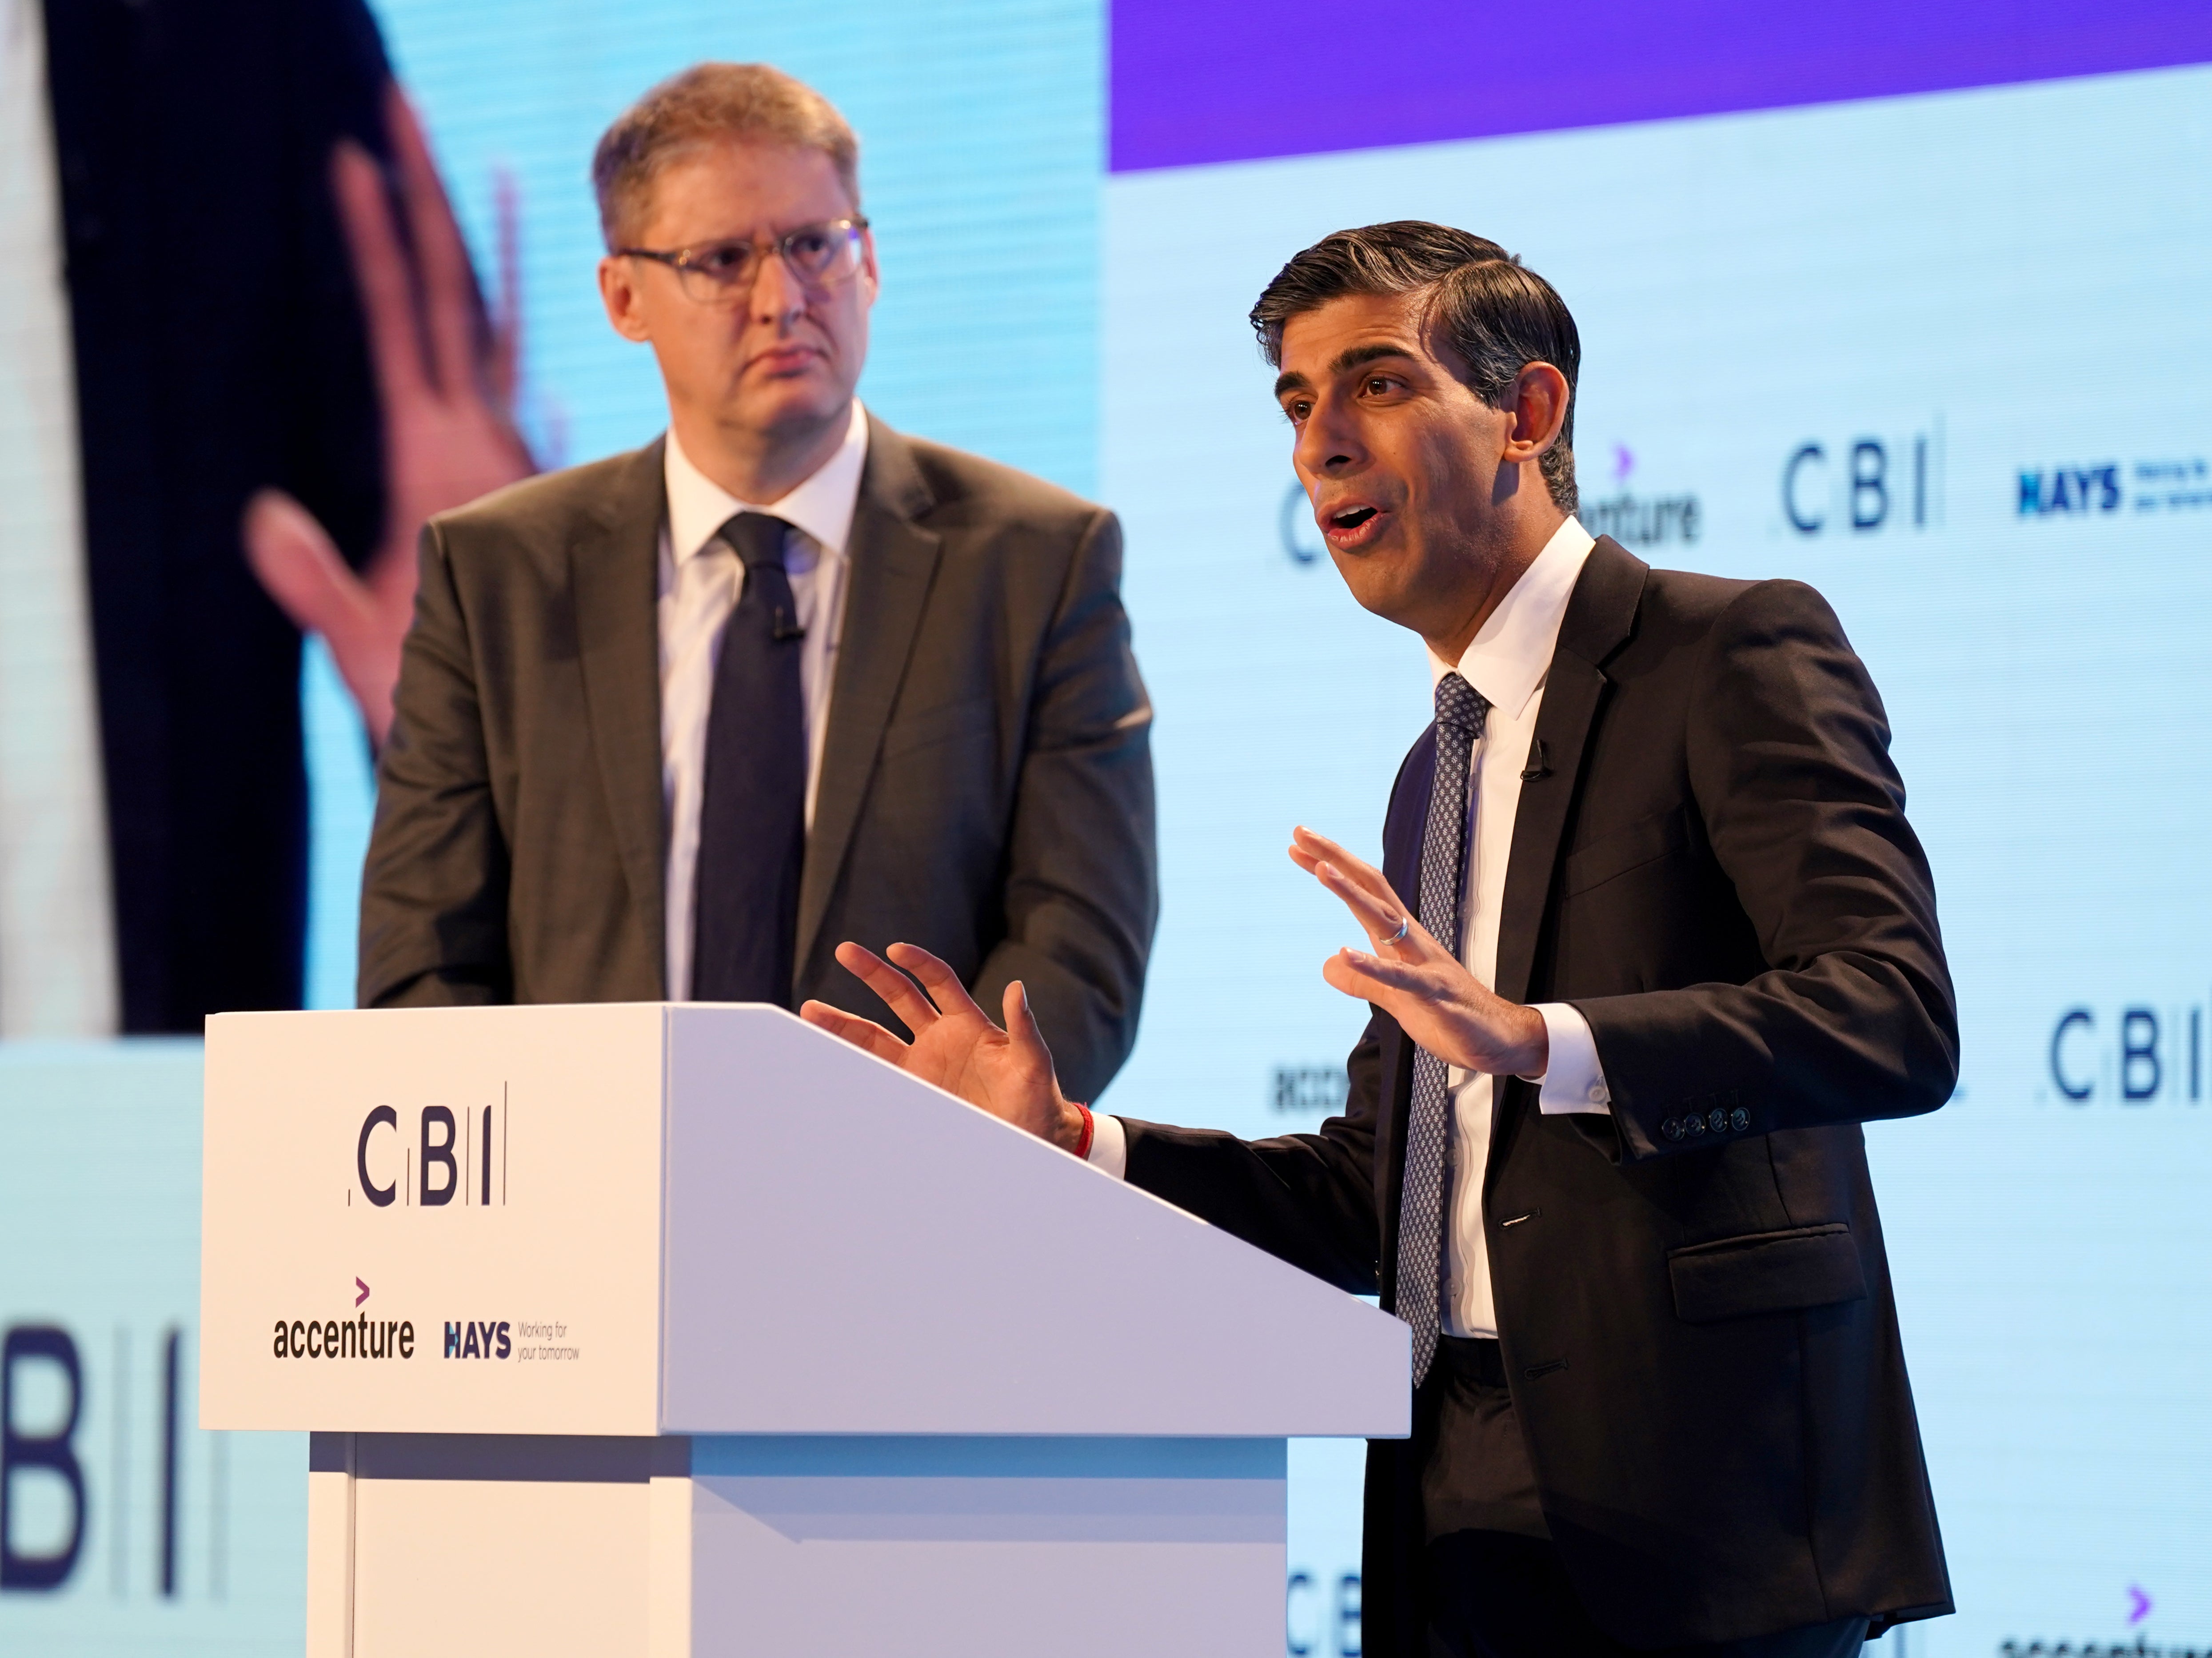 Former CBI chief Tony Danker with Rishi Sunak at the CBI annual conference in 2022